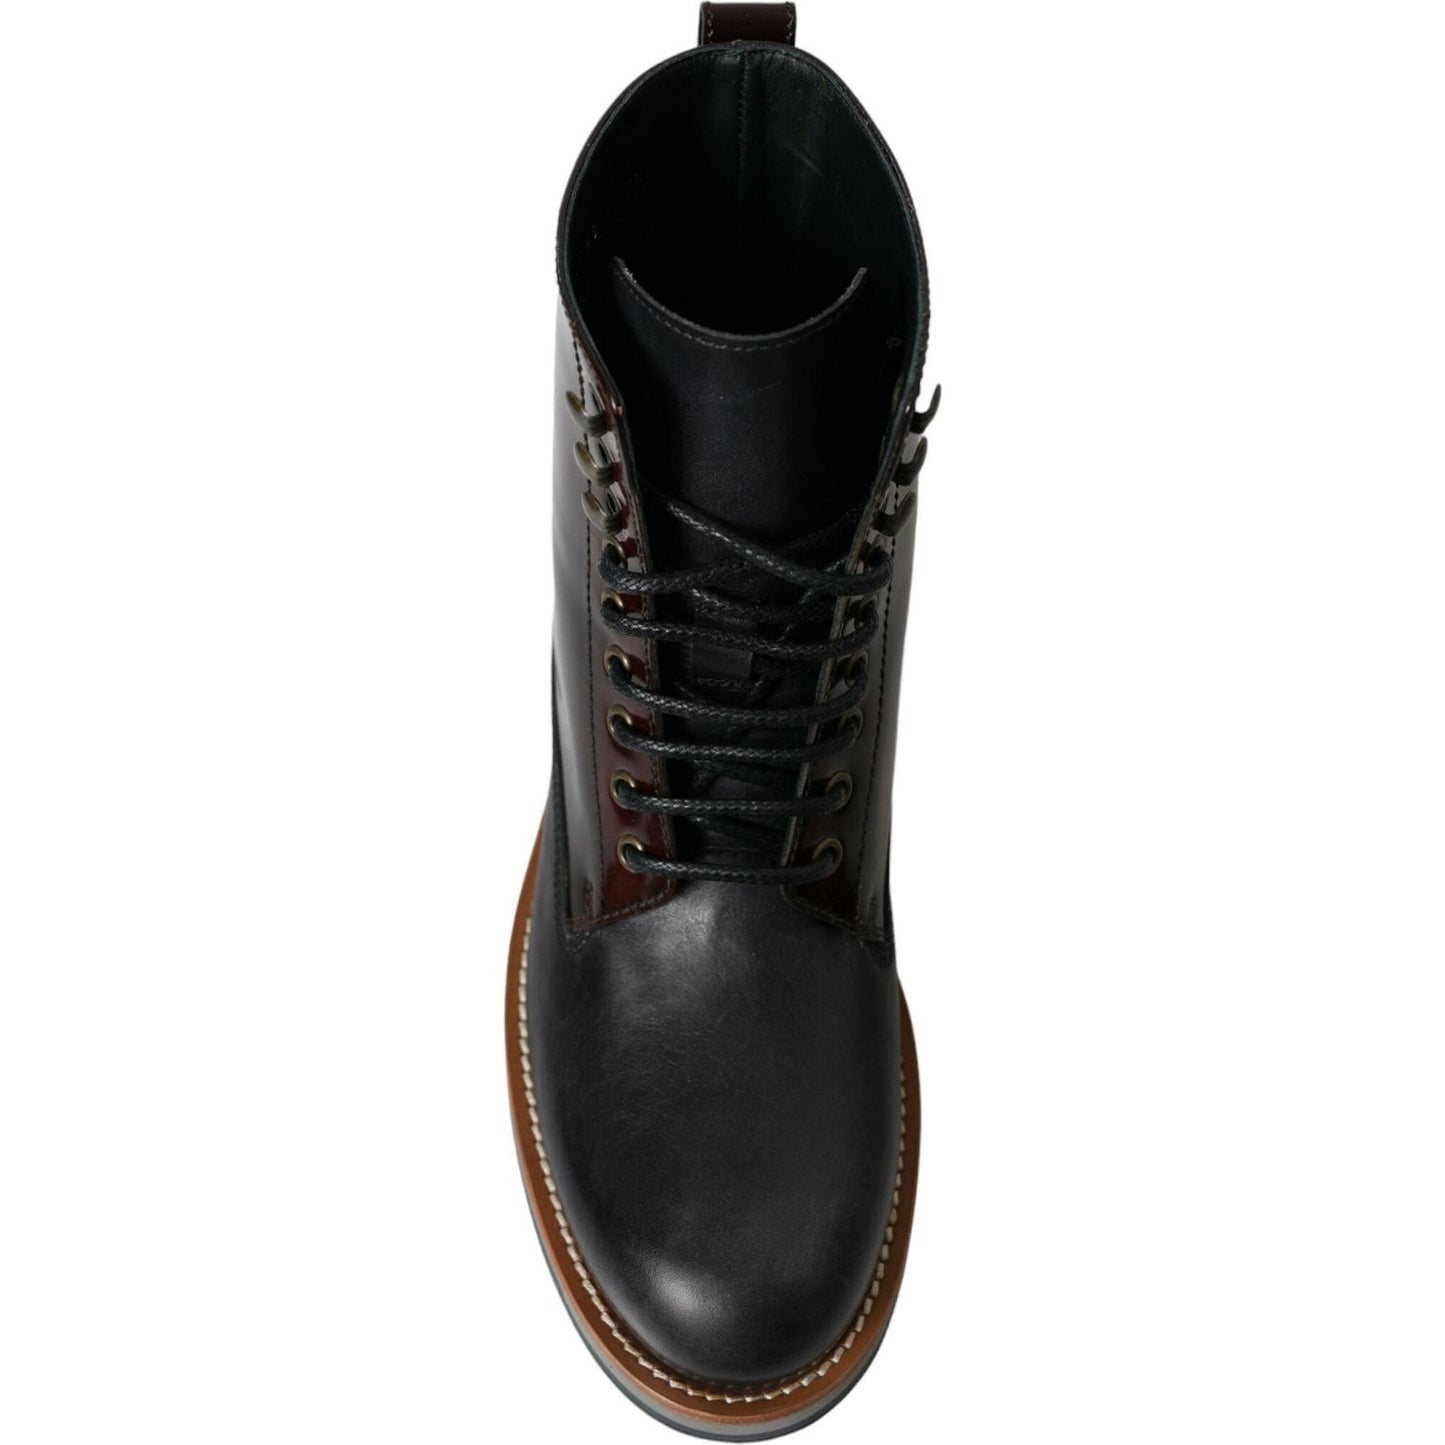 Dolce & Gabbana Elegant Bi-Color Leather Boots black-leather-military-combat-boots-shoes